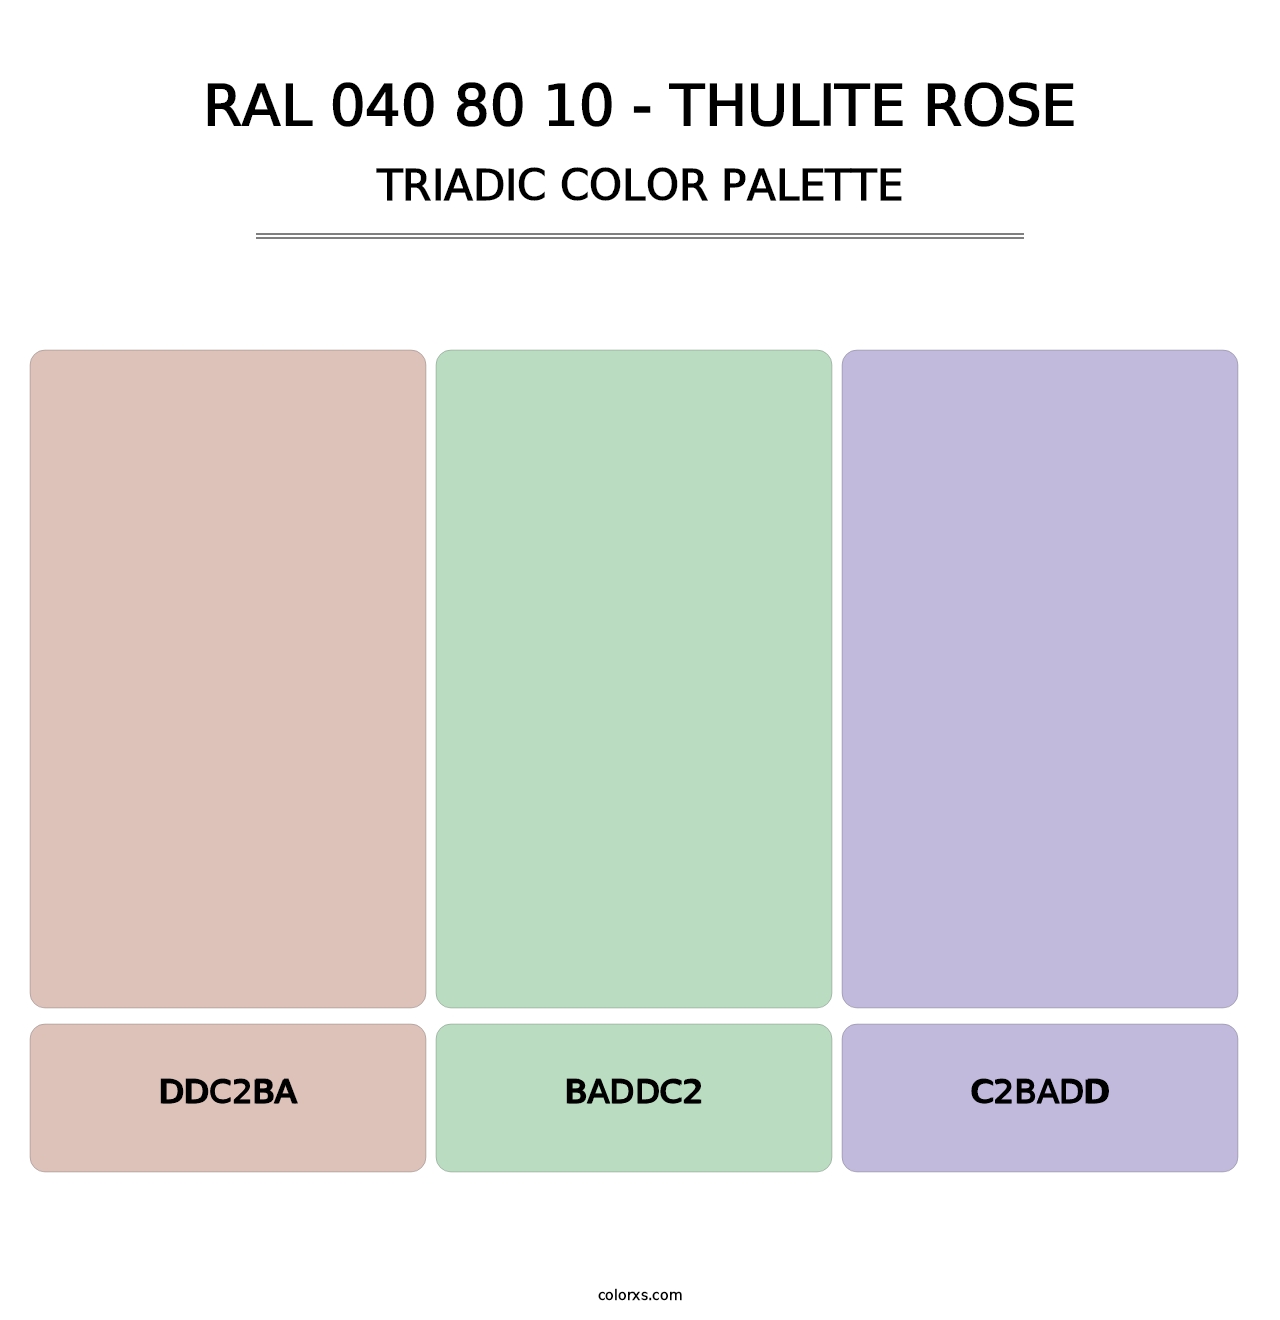 RAL 040 80 10 - Thulite Rose - Triadic Color Palette